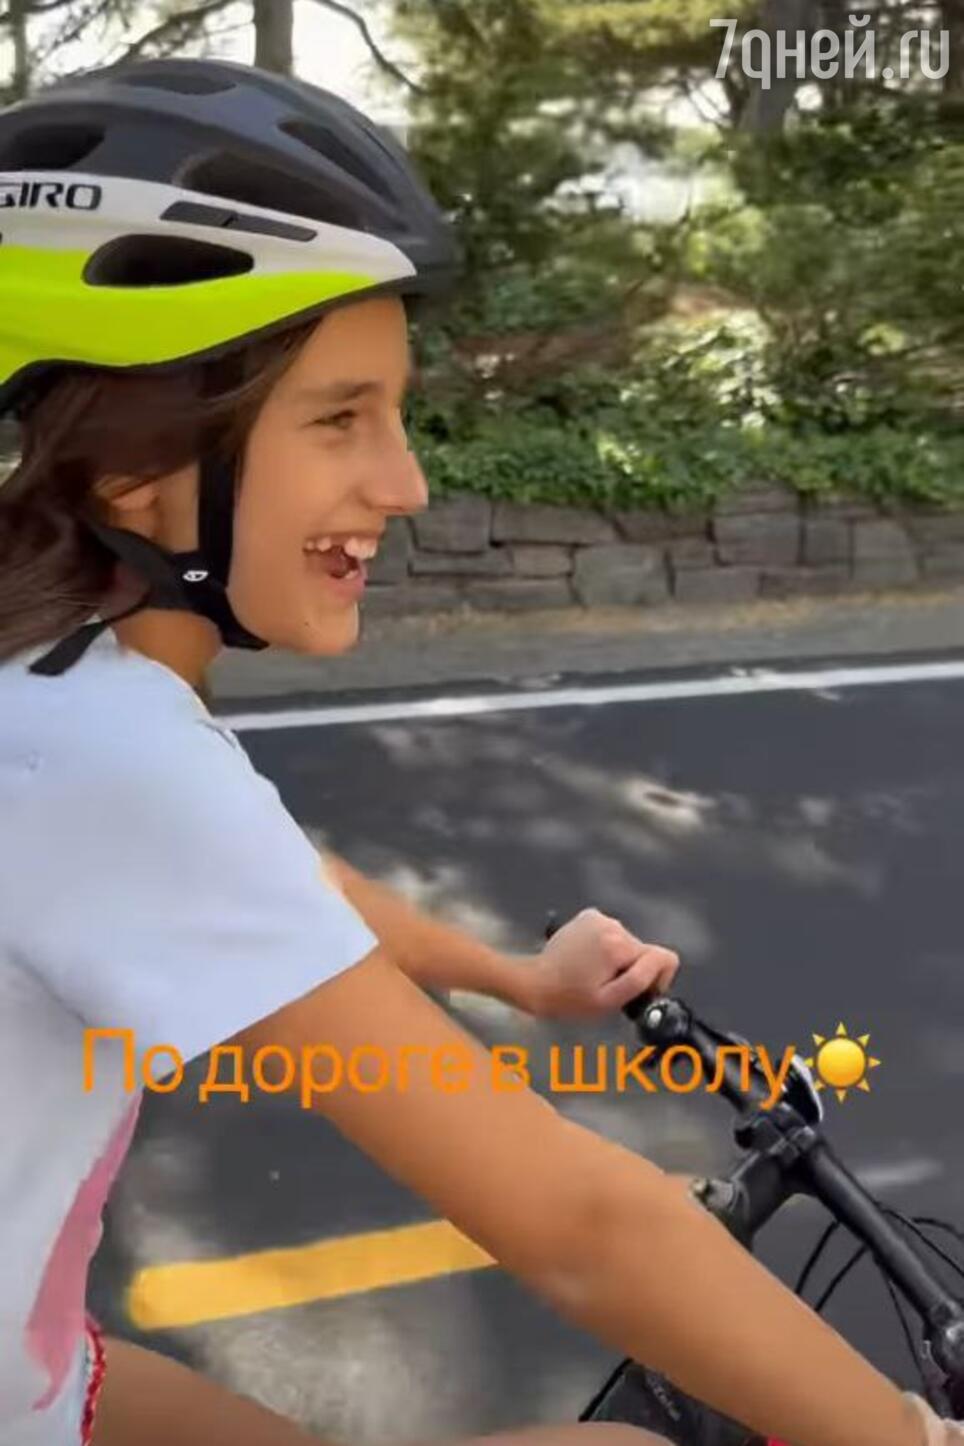 Фото Клавдии дочери Орбакайте в шортах на велосипеде